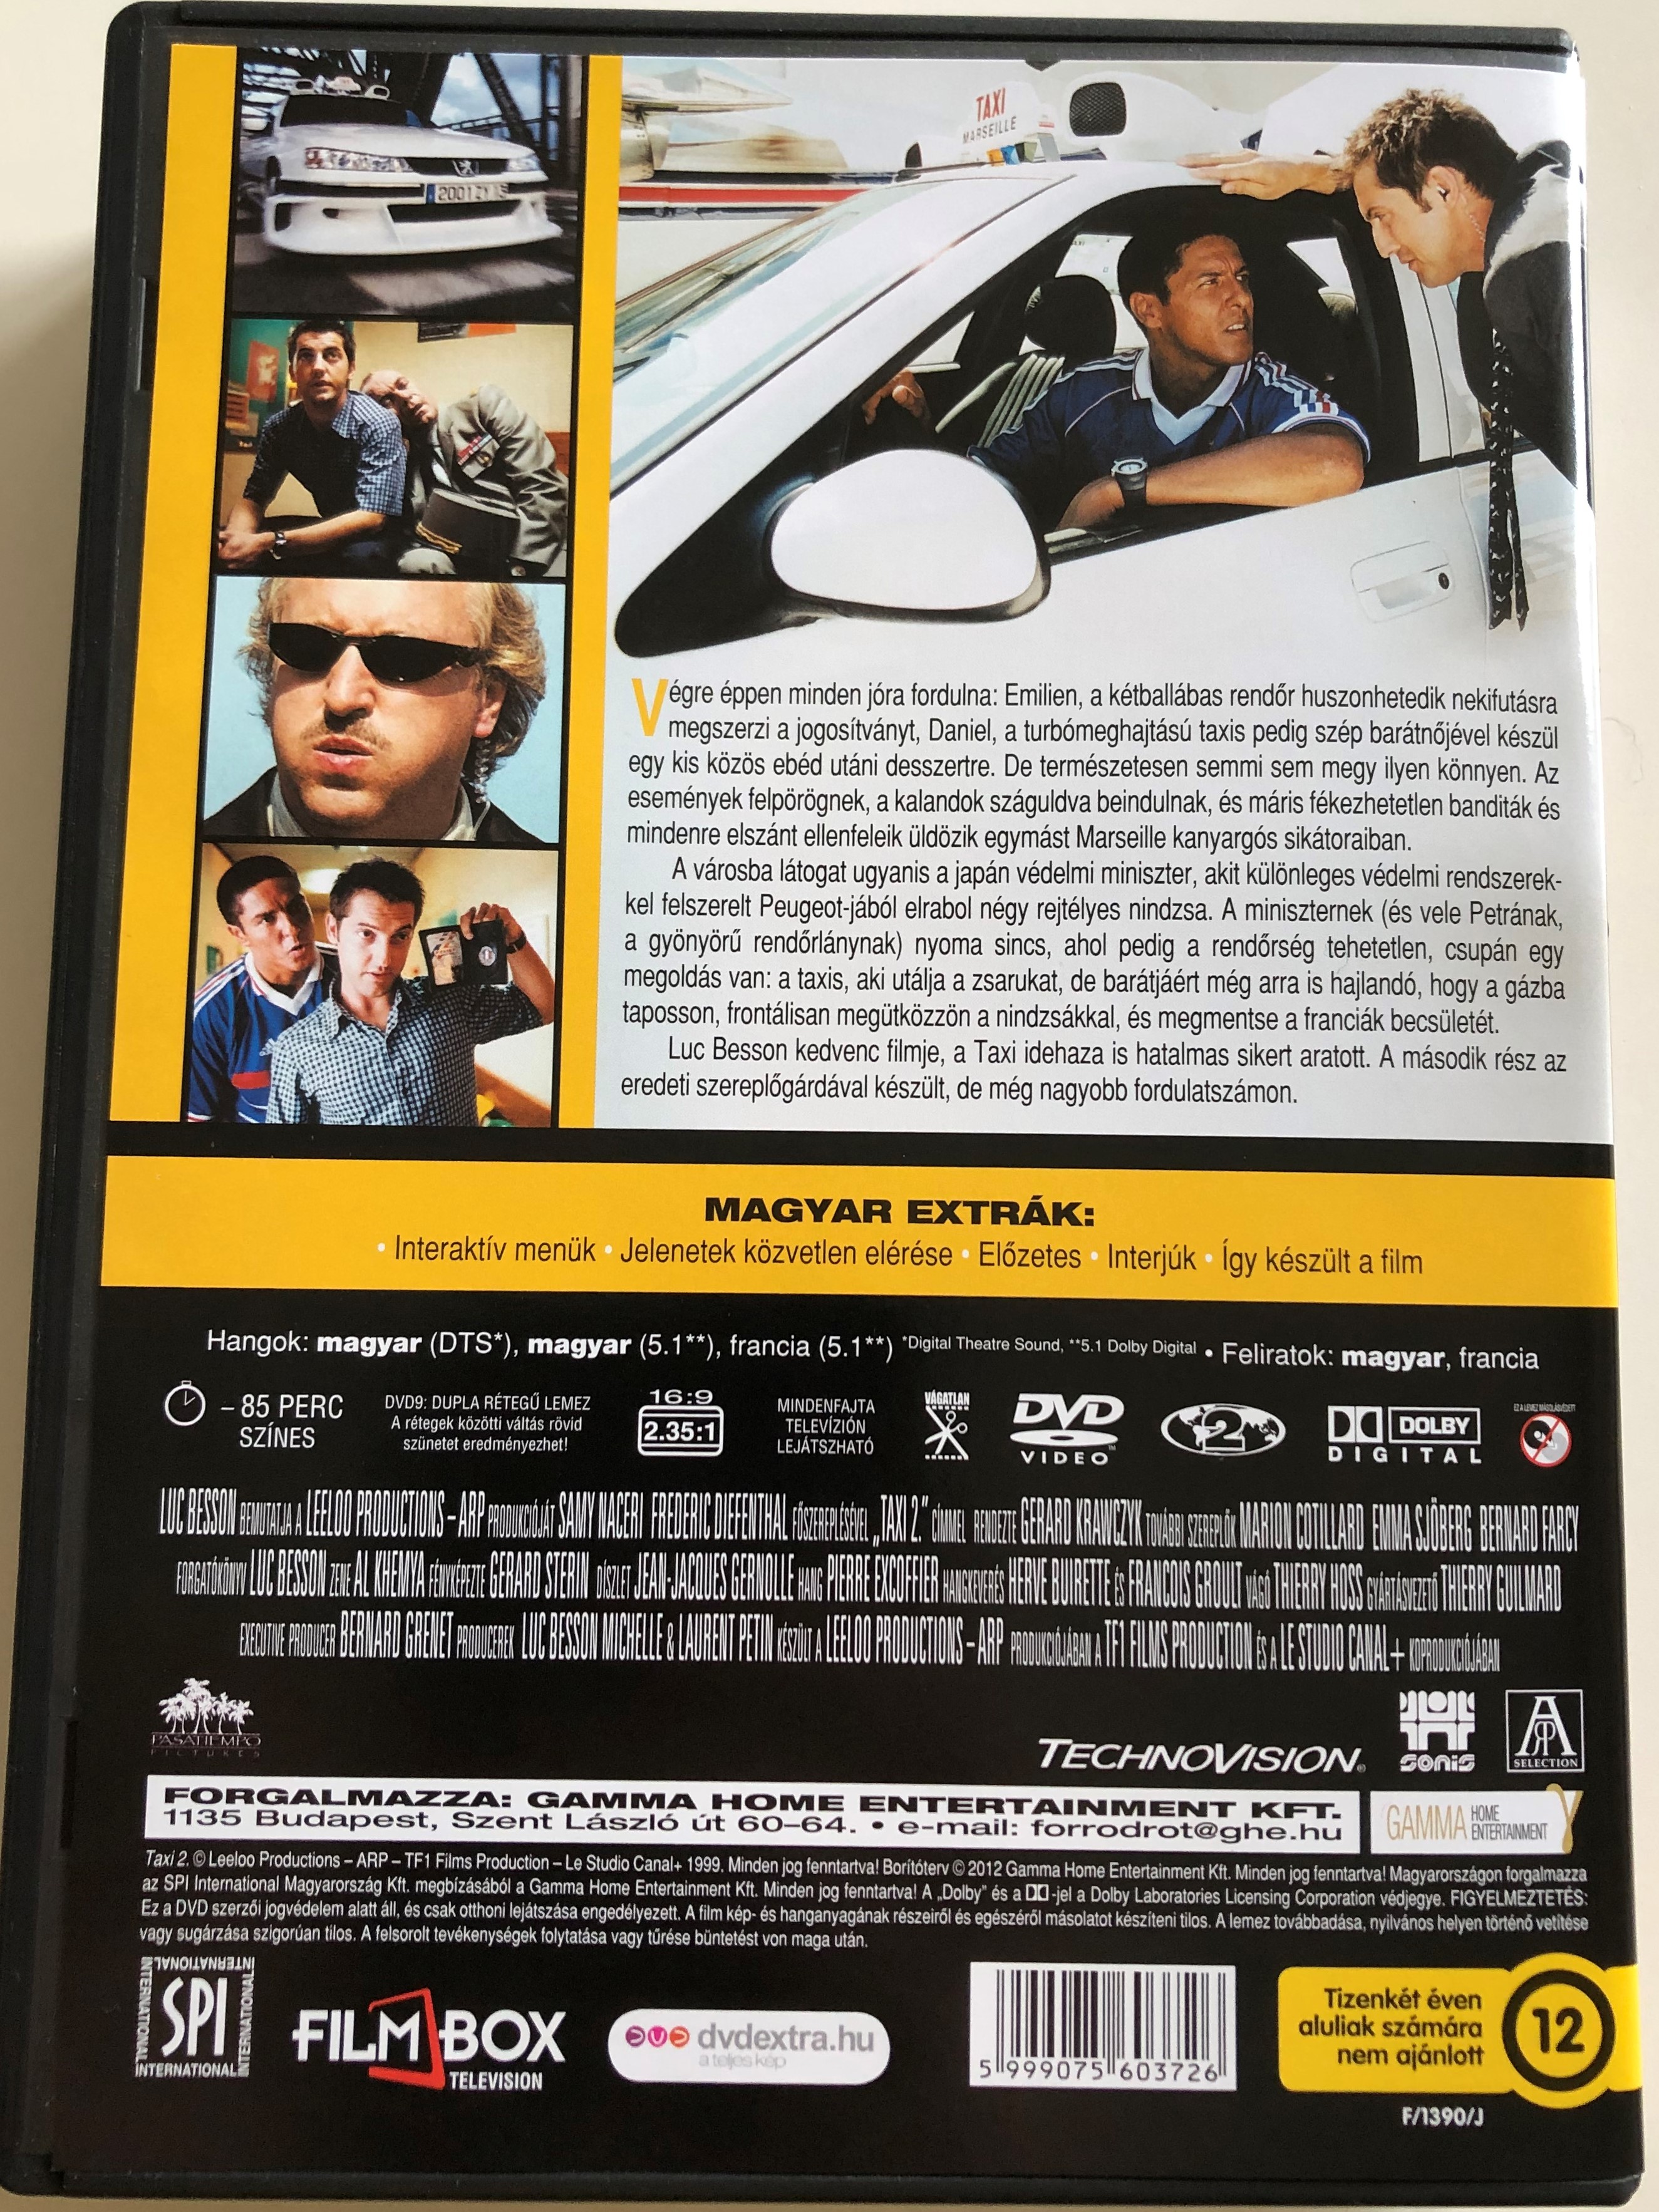 Boost Turn down Perth Blackborough Taxi 2 DVD 2000 / Directed by Gerard Krawczyk / Starring: Samy Naceri,  Frederic Diefenthal, Marion Cotillard, Emma Sjöberg - bibleinmylanguage